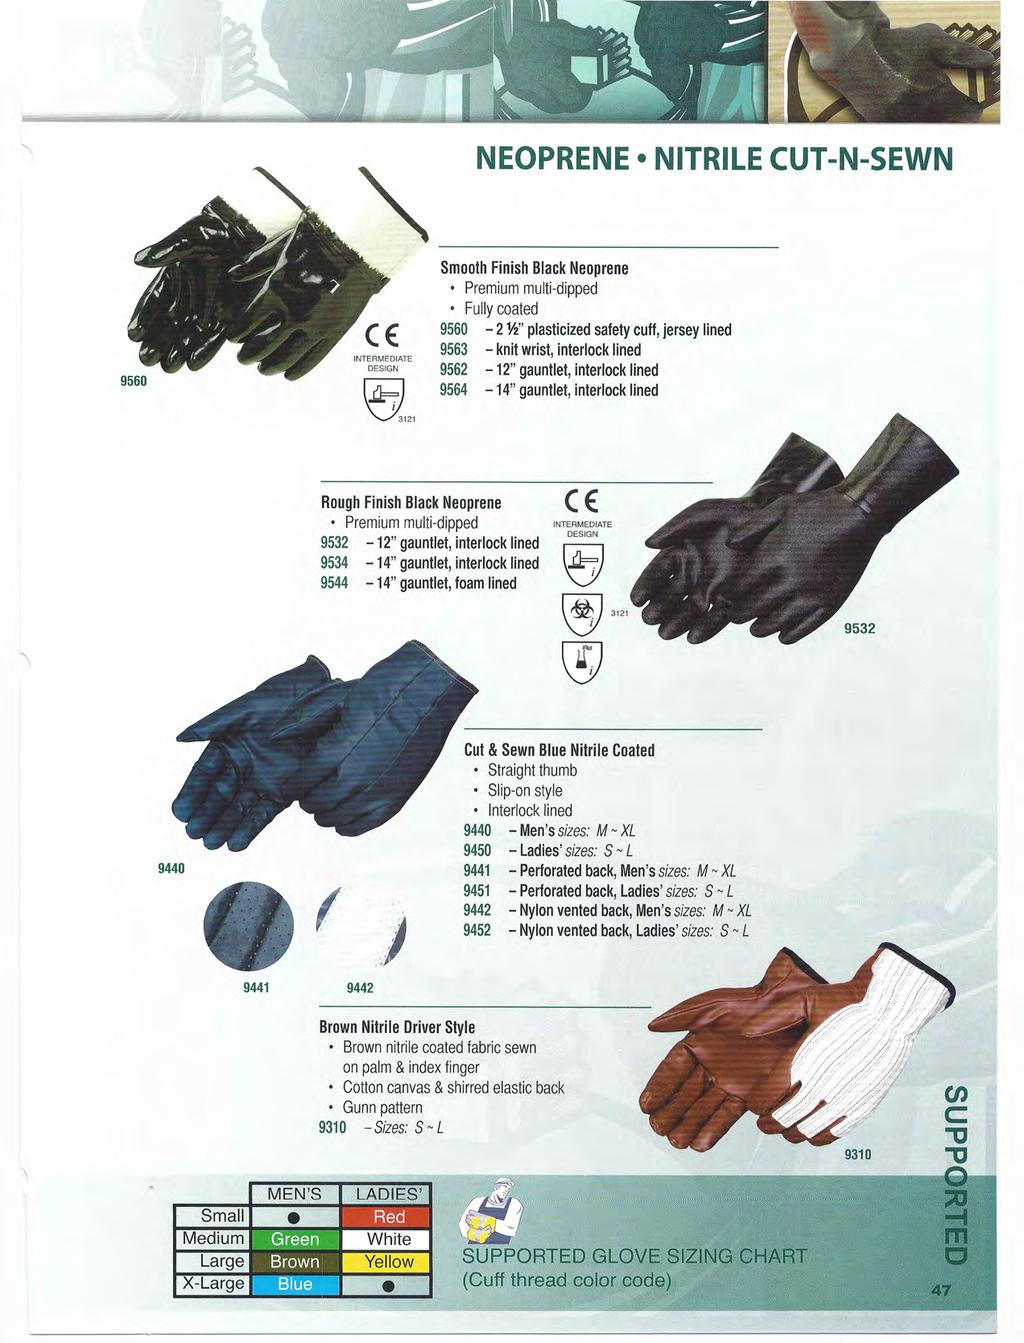 NEOPRENE NITRILE CUT-N-SEWN ""-- Smooth Finish Black Neoprene INTERMEDIATE DESIGN ra=l 12 1 Premium multi-dipped Fully coated 956-2 ½" plasticized safety cuff, jersey lined 9563 - knit wrist,